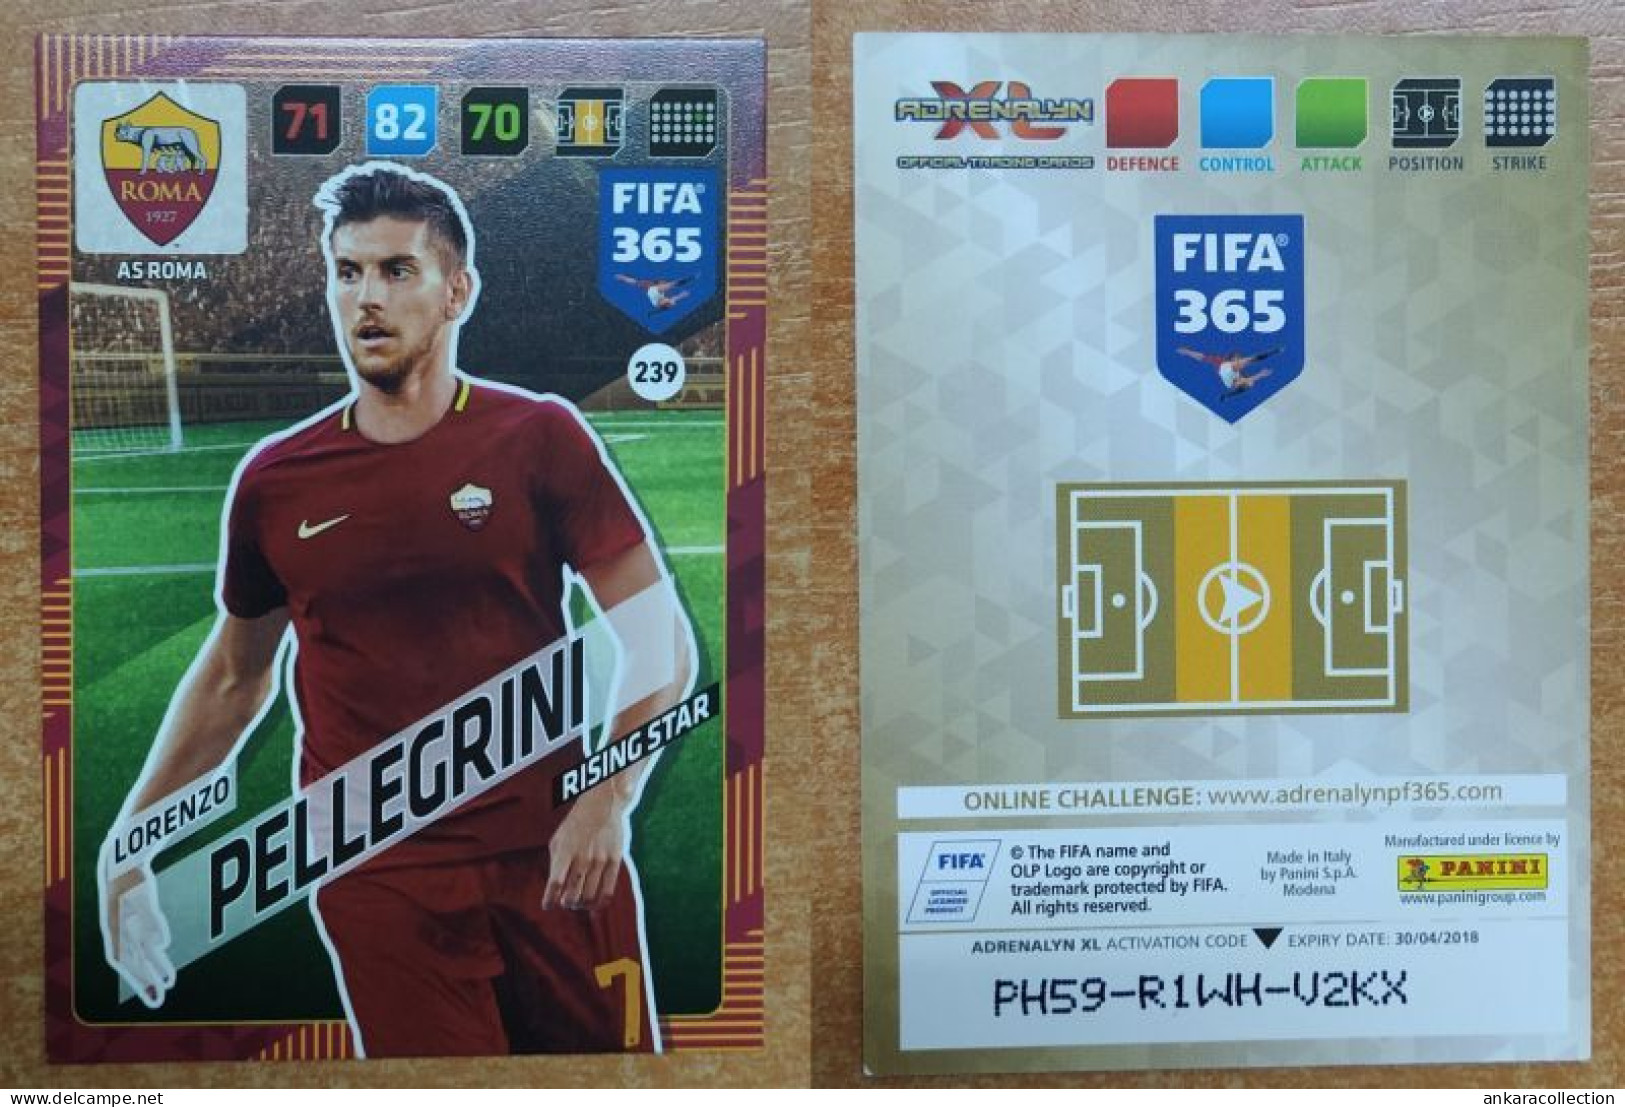 AC - 239 LORENZO PELLEGRINI  AS ROMA  RISING STAR  FIFA 365 PANINI 2018 ADRENALYN TRADING CARD - Trading Cards